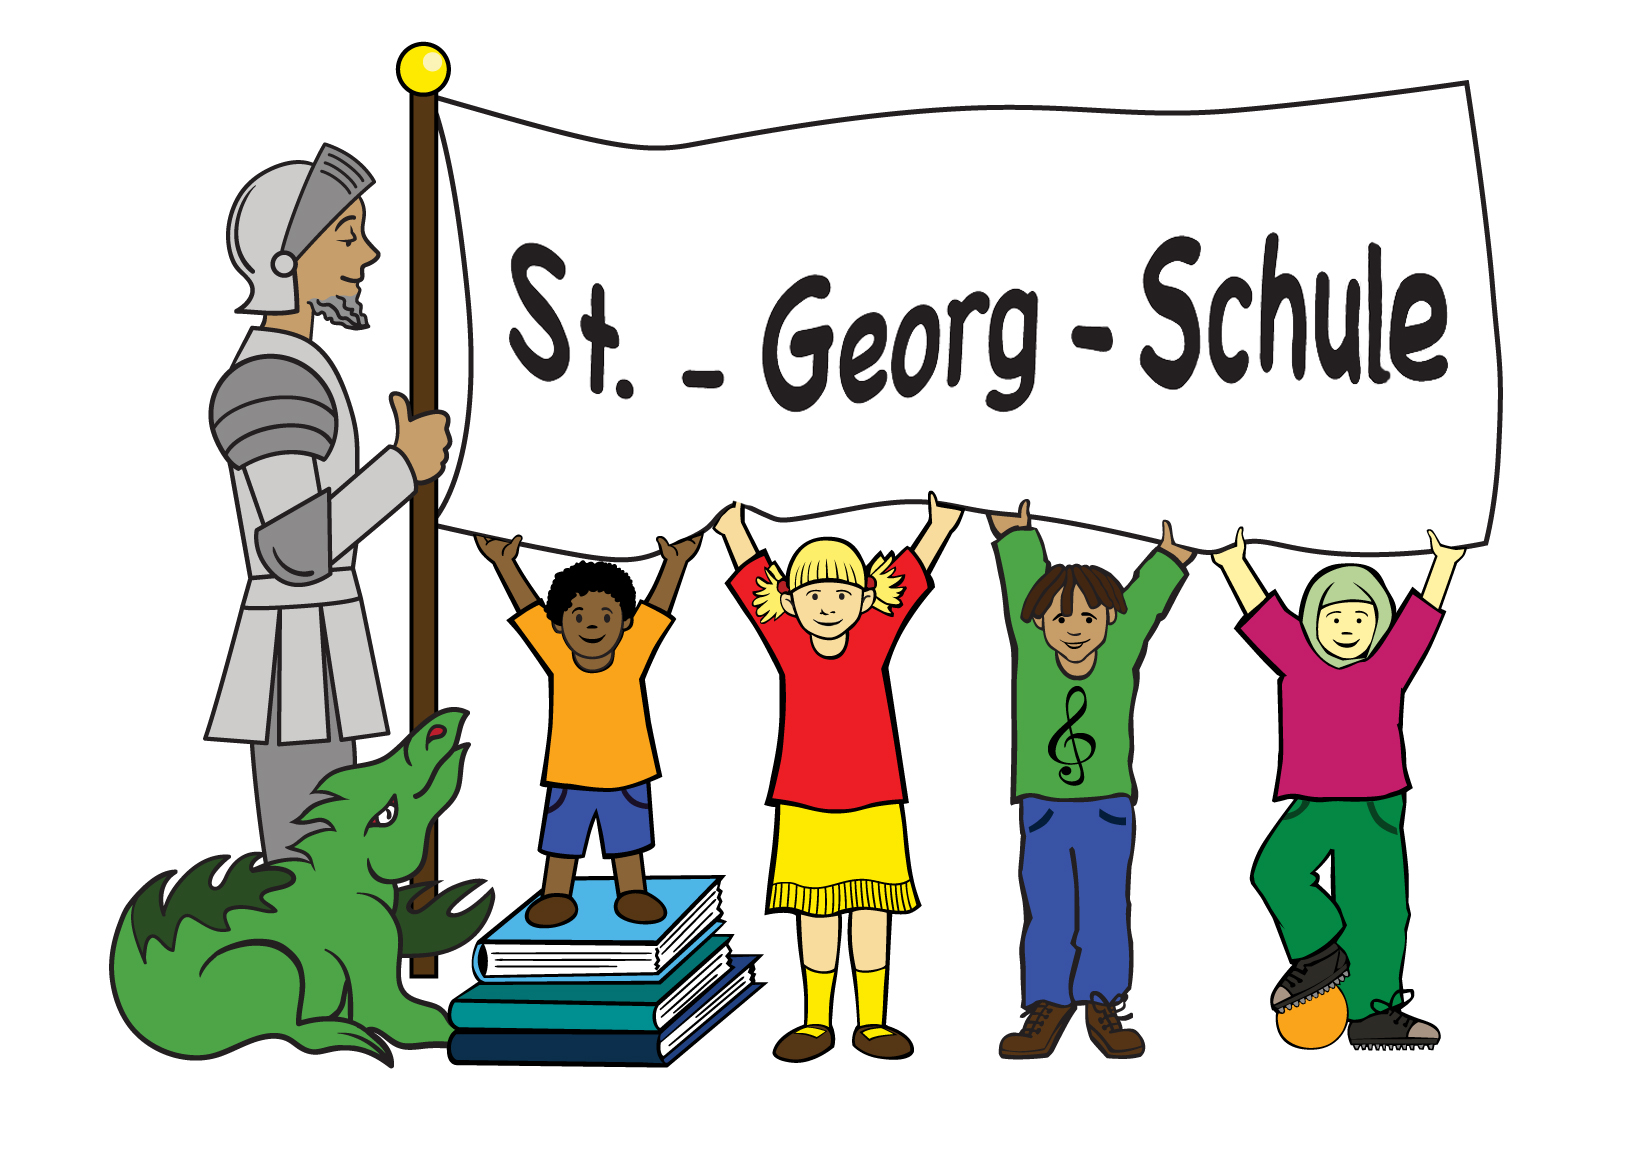 St.-Georg-Schule Heide - Grundschule der Stadt Heide